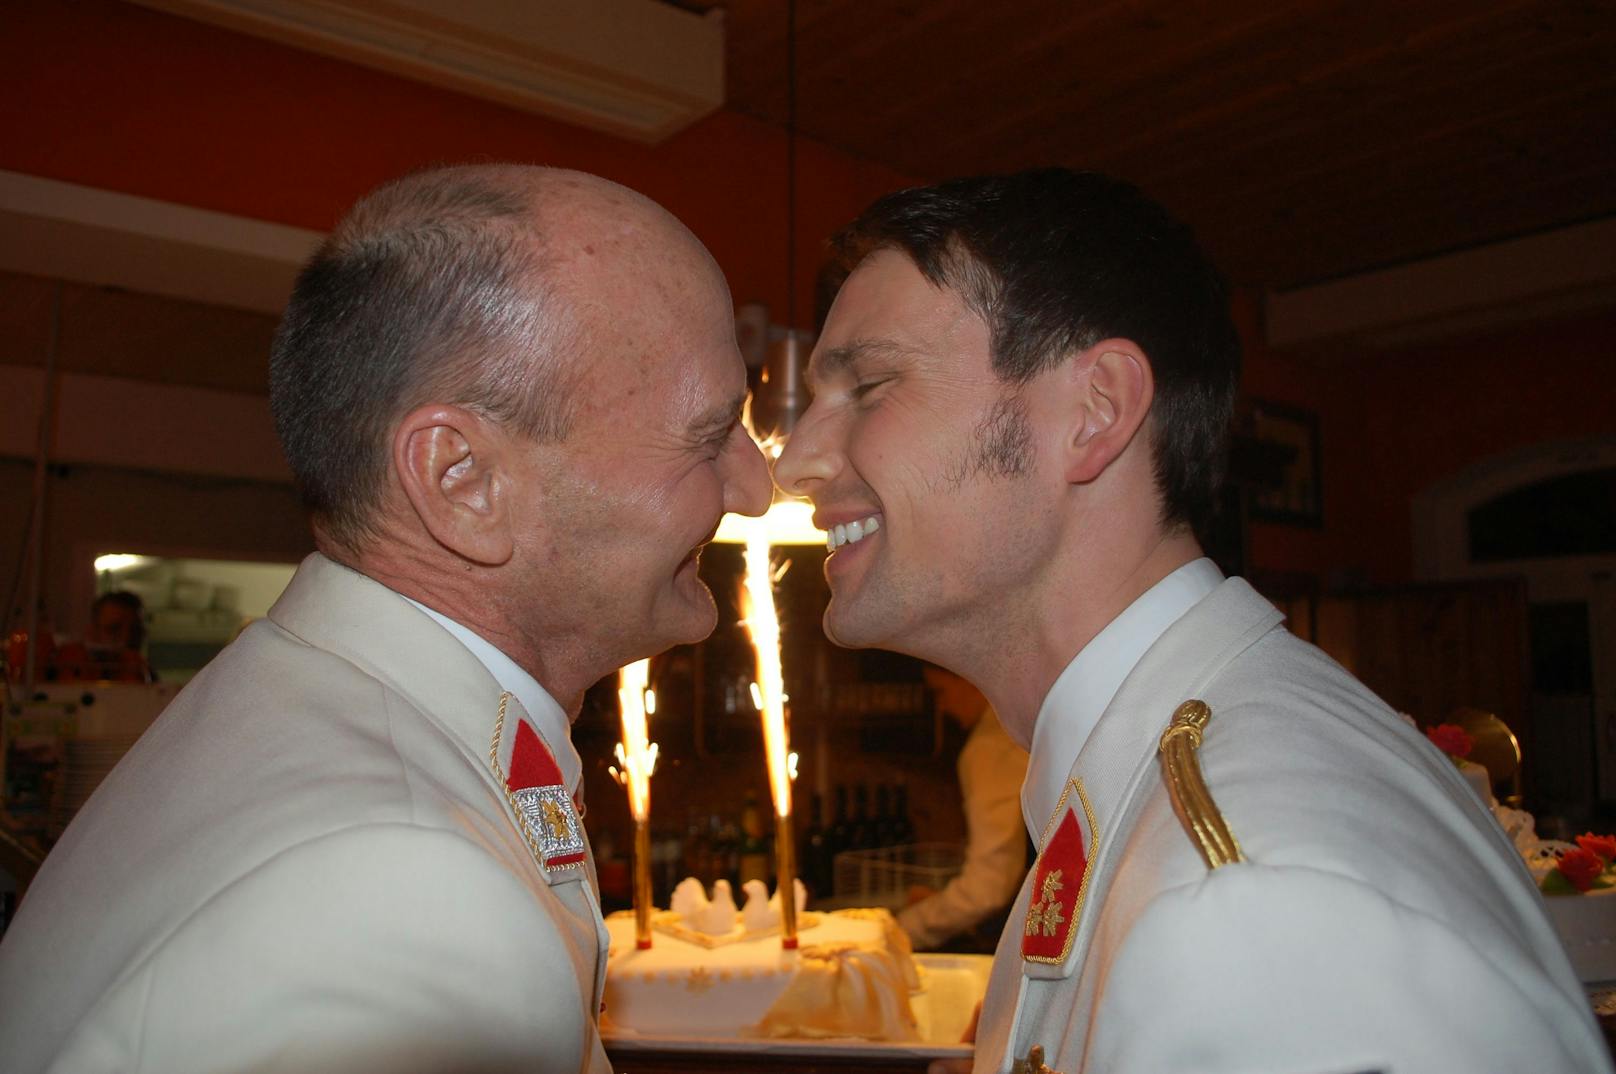 2014 heiratete Eismayer den Offizier Mario Falak…